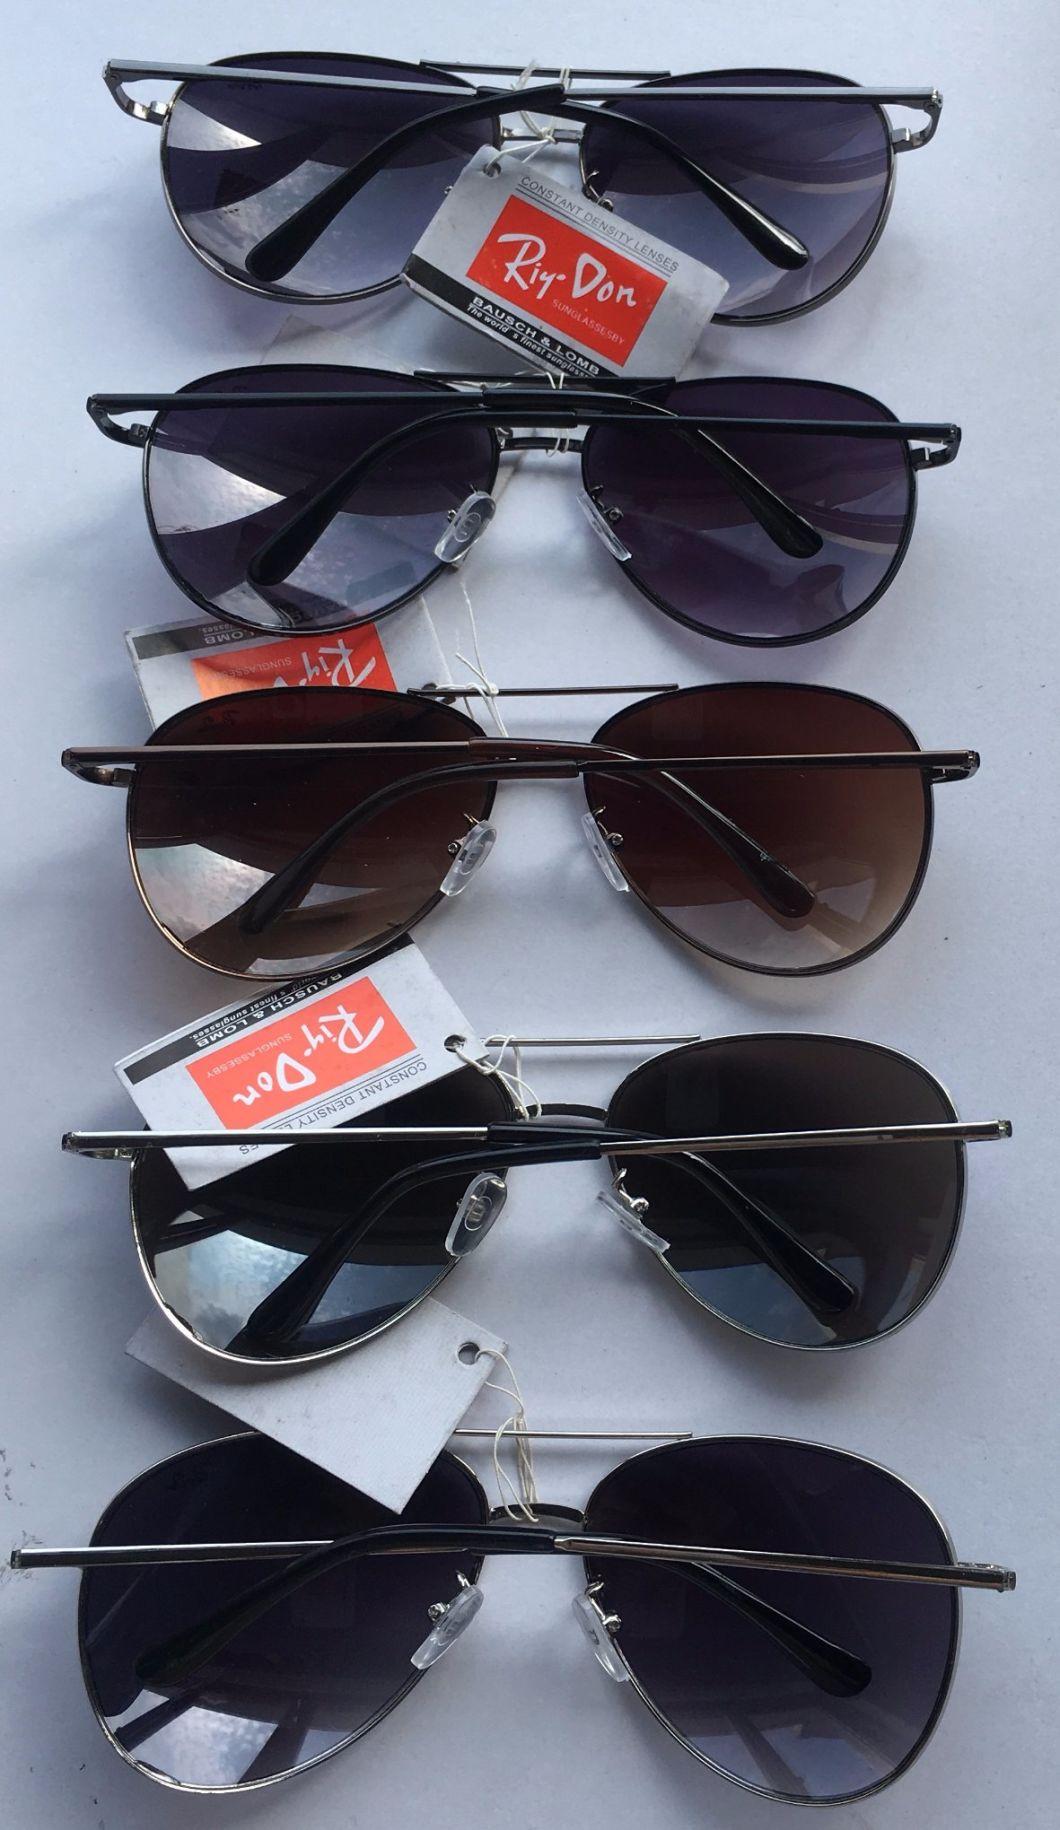 Polarized Lens Sunglasses Ready Goods Ready Sunglasses Stock Sunglasses Ks3025